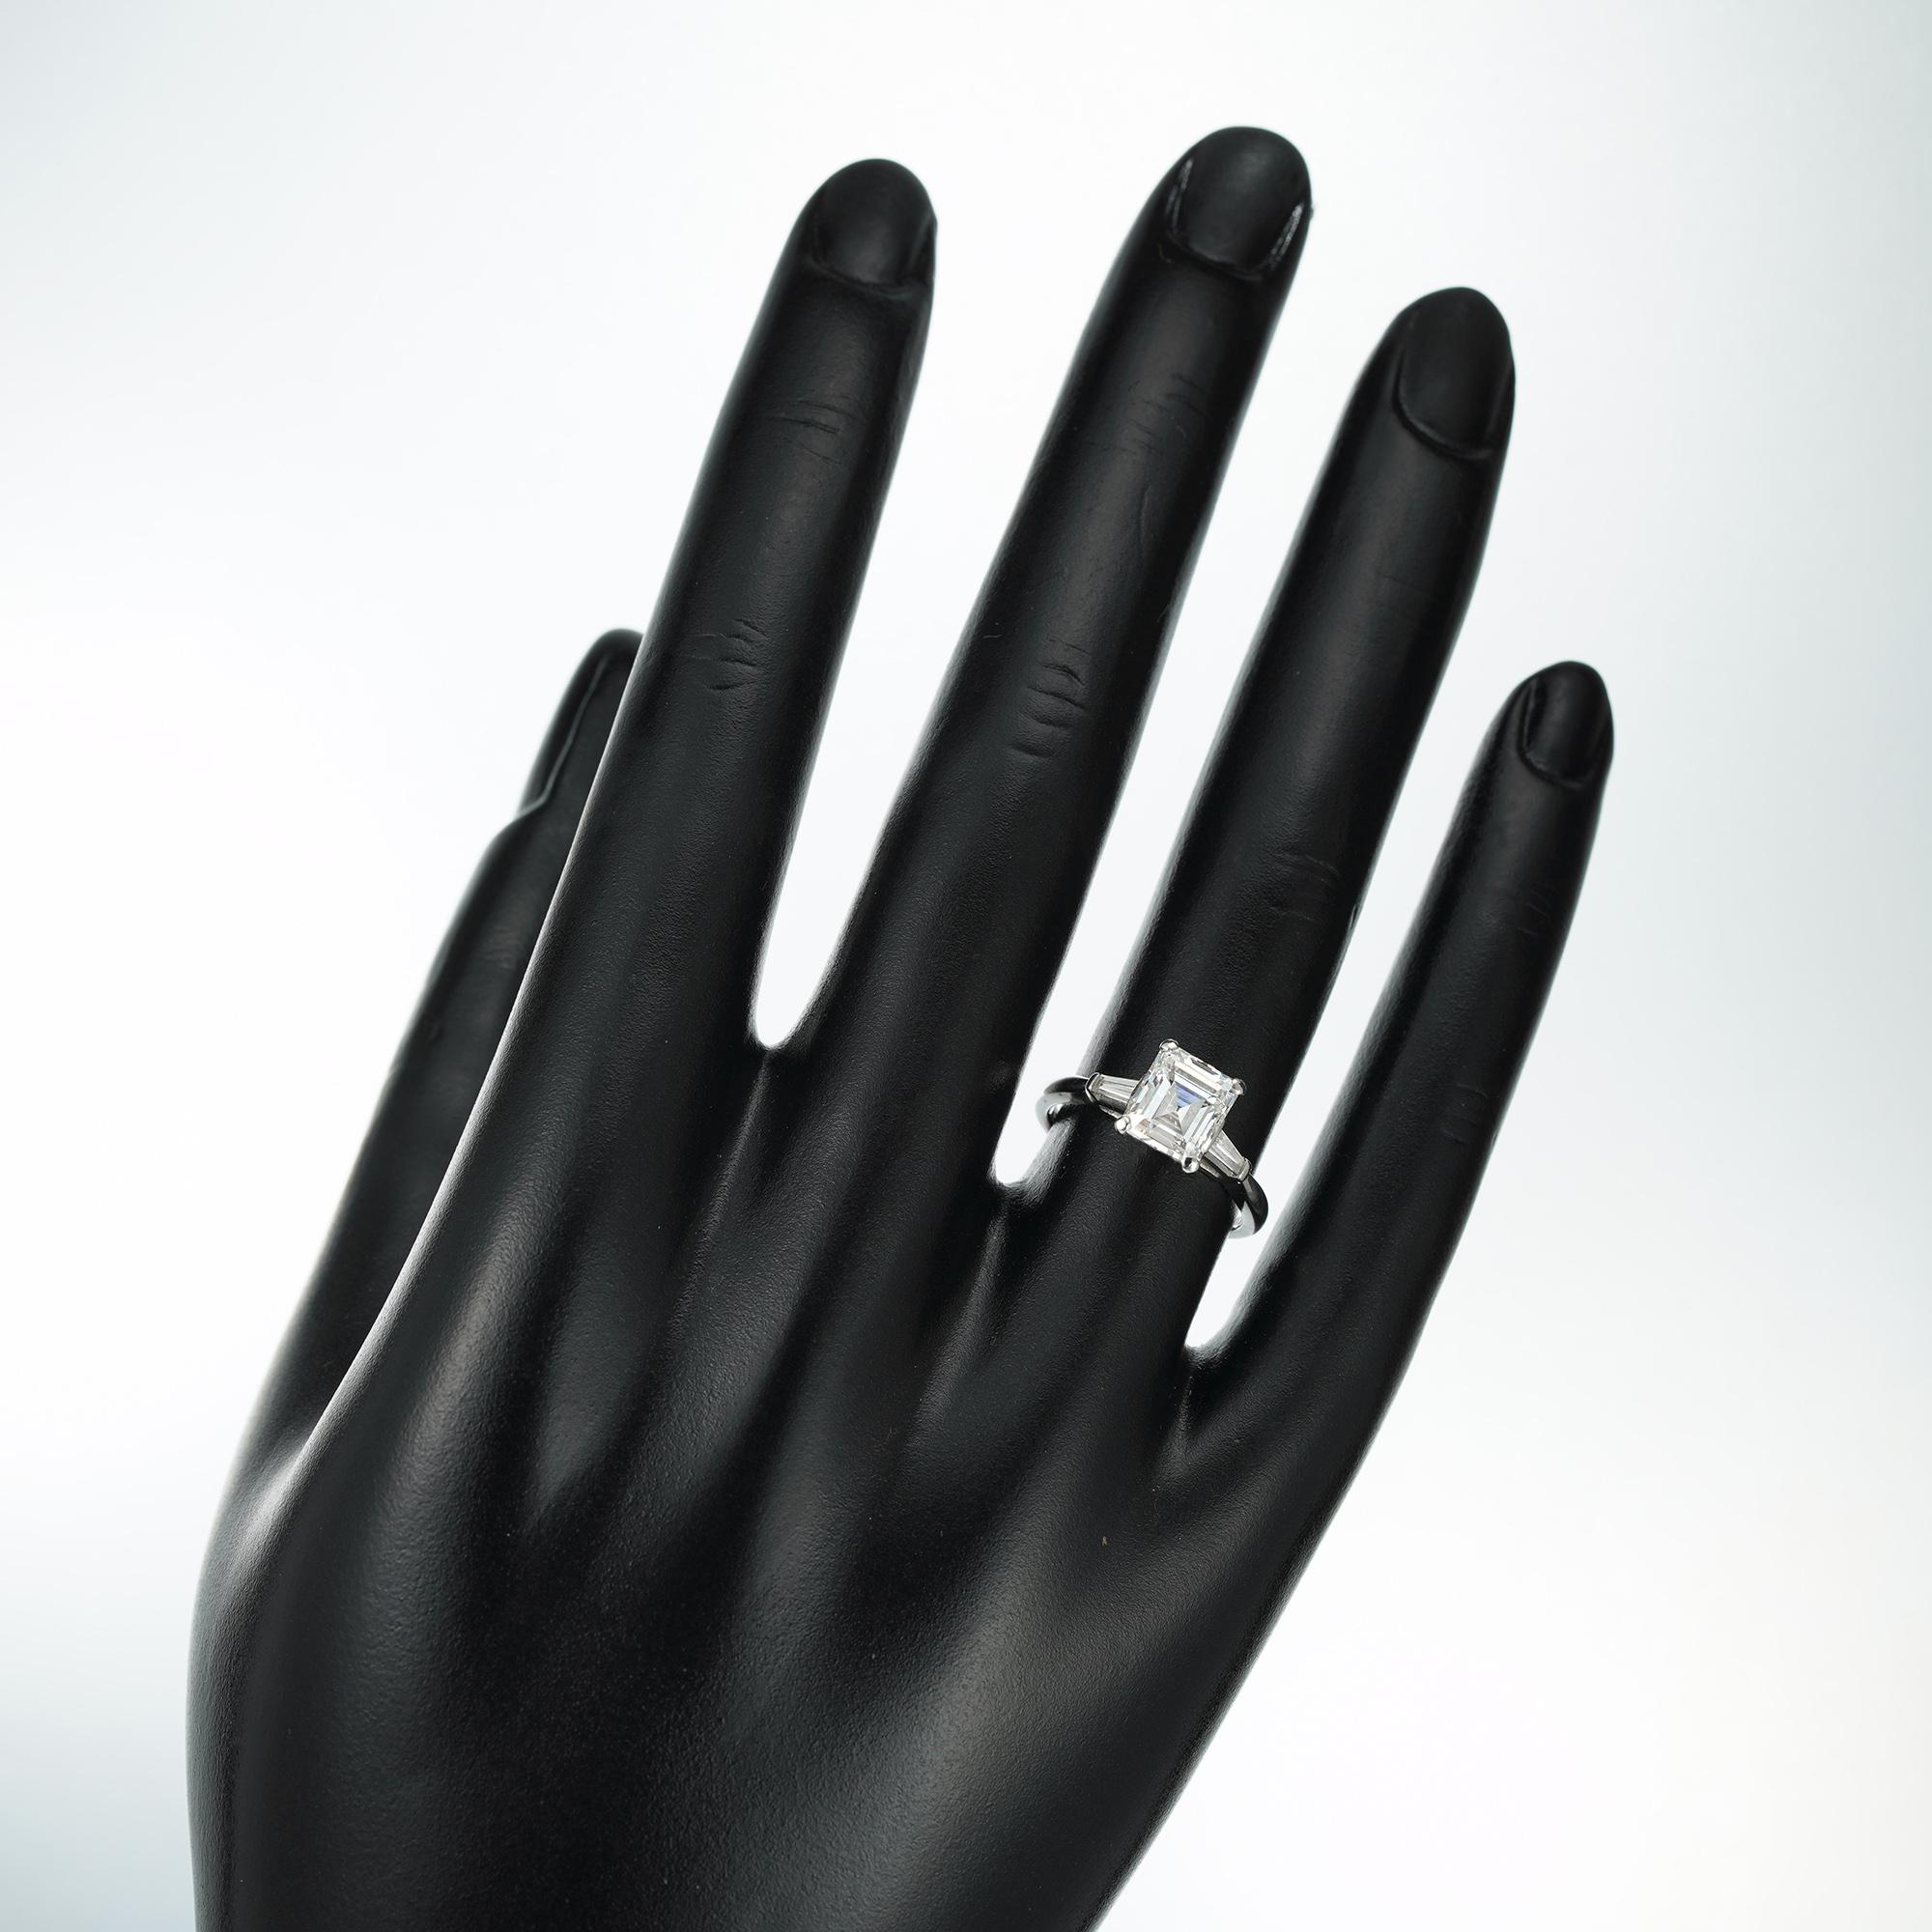 Emerald Cut GIA Certified 2.15 Carat Emerald-Cut Diamond Ring